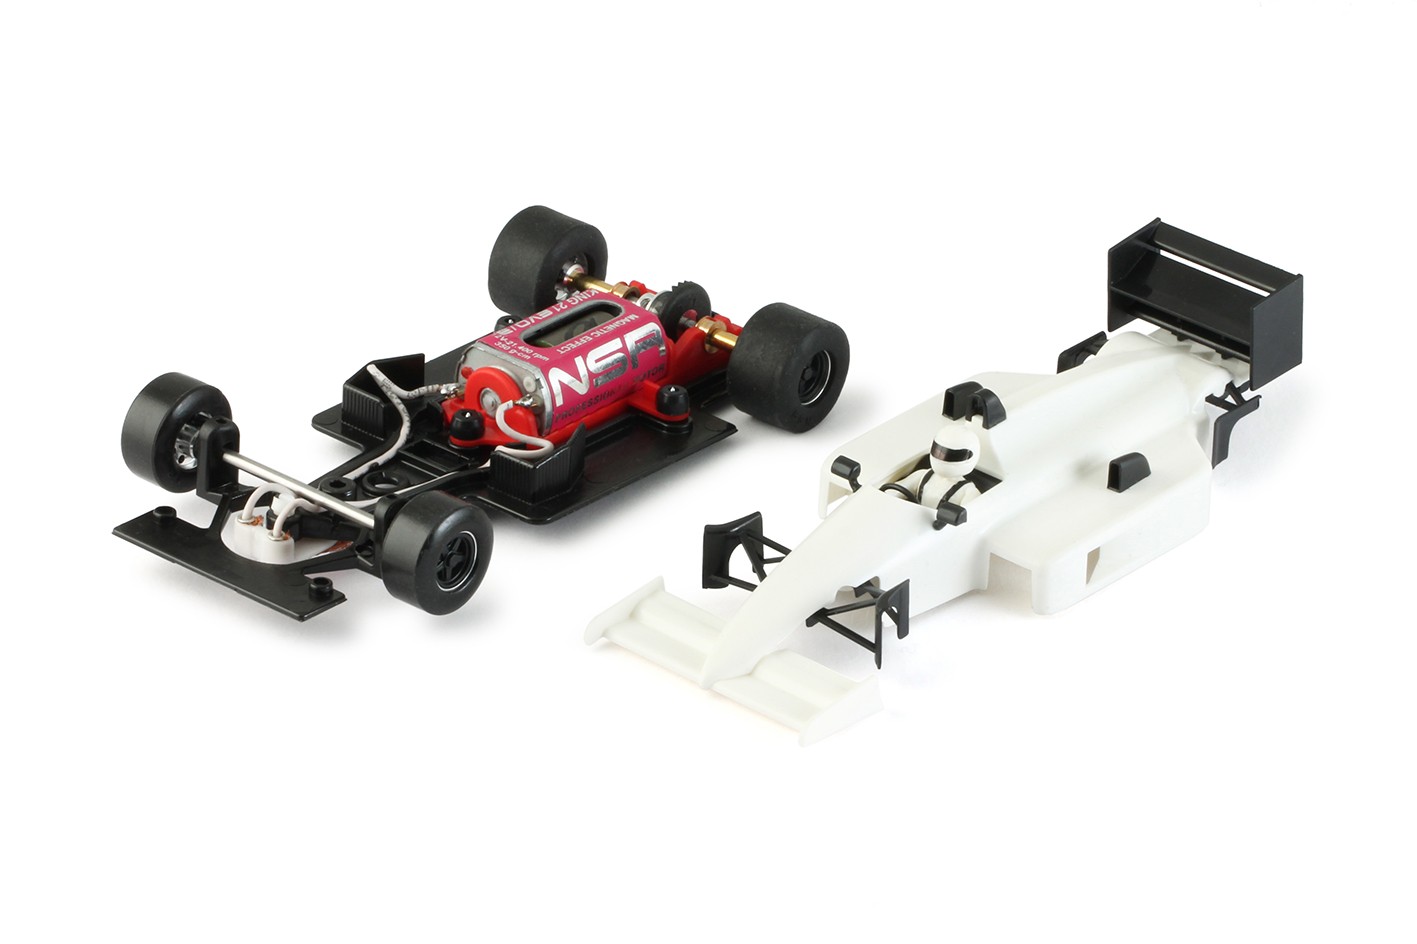 NSR - Formula 86/89, Kit White: 0162IL